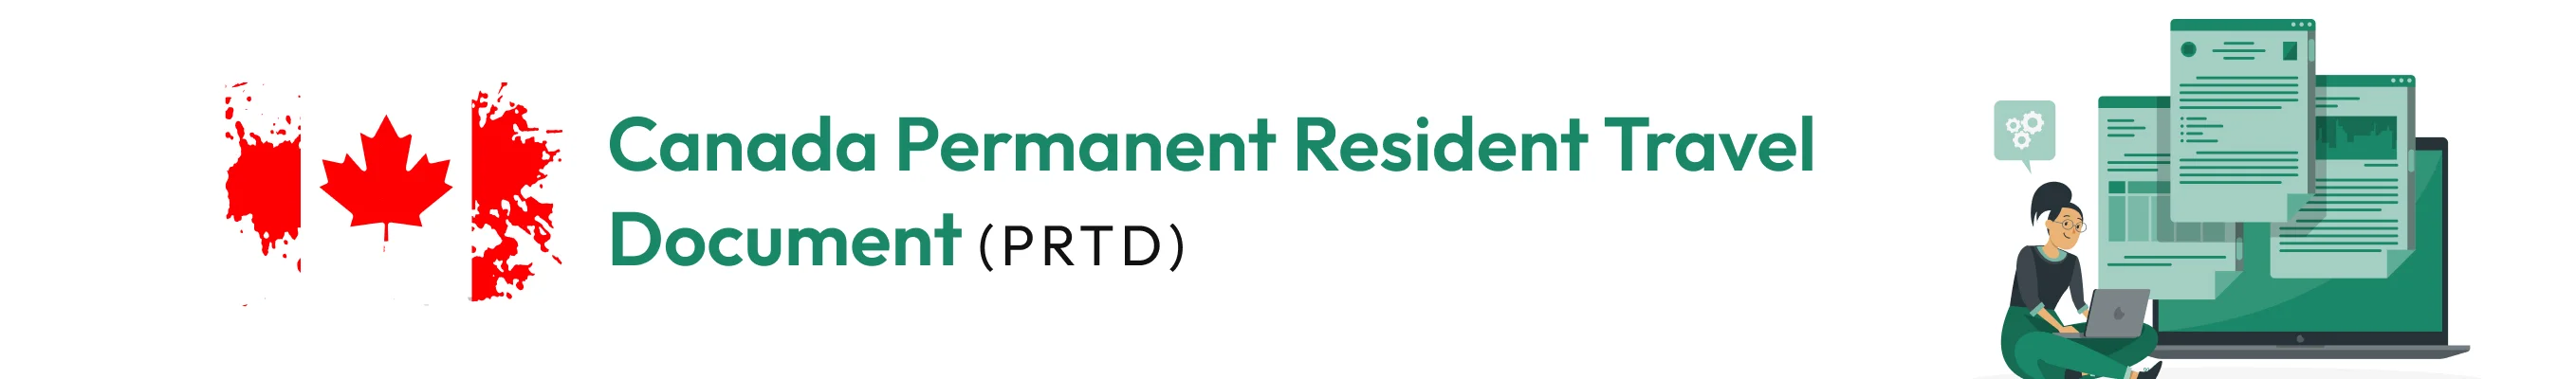 canada-permanent-resident-travel-document.webp